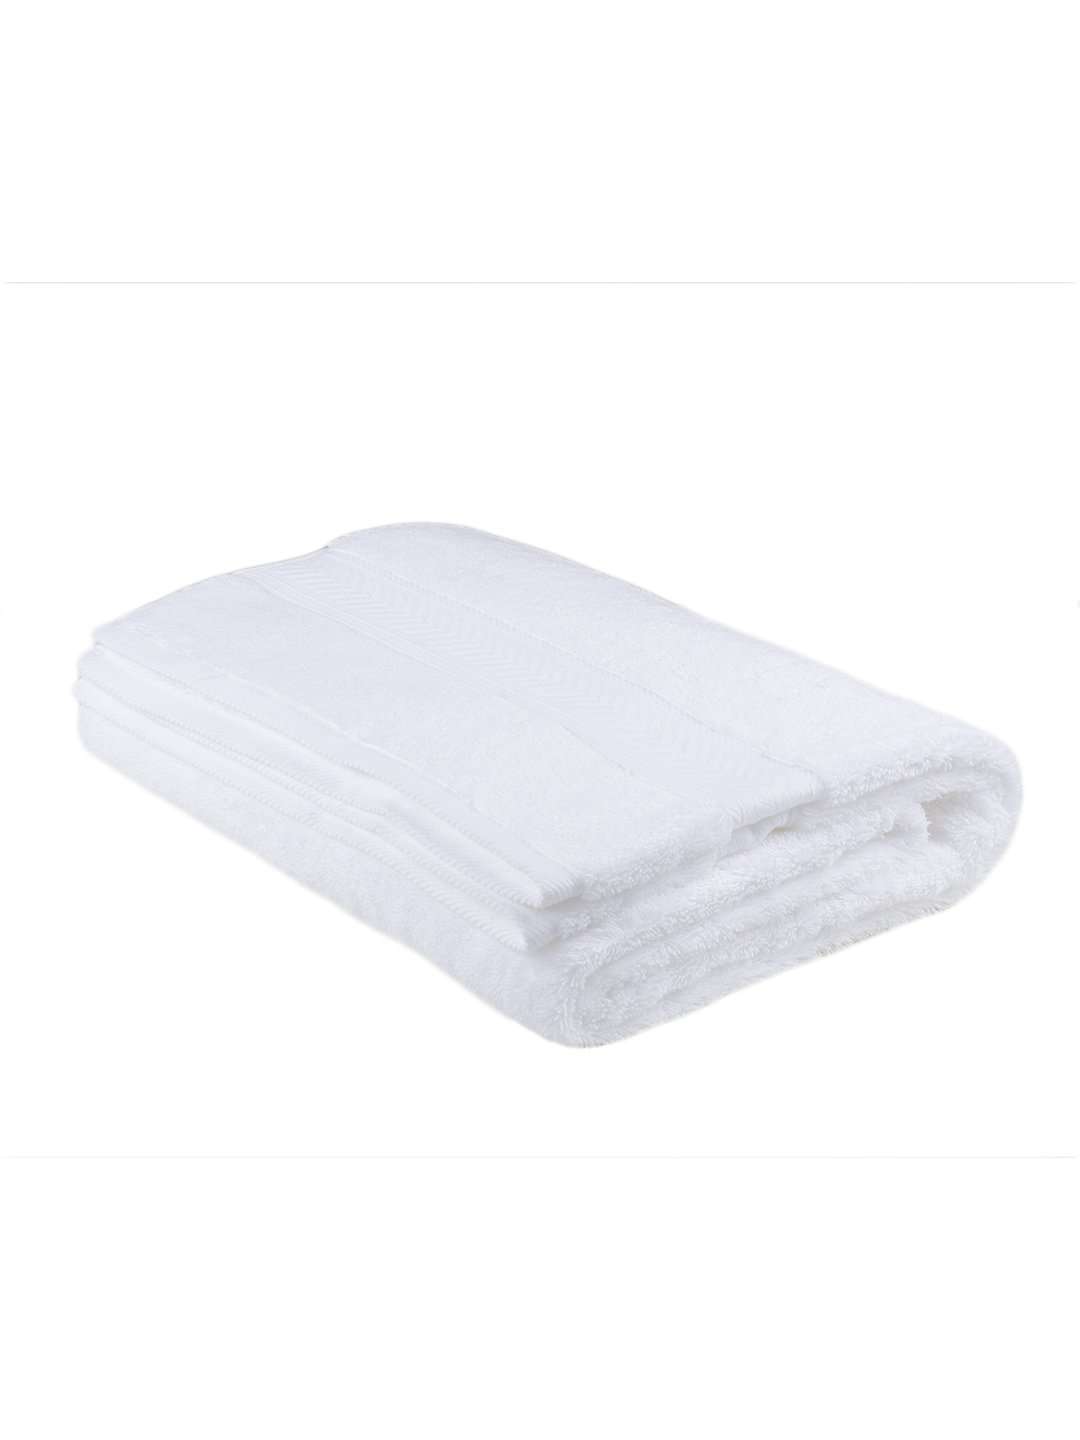 Turkish Bath Cotton 700 GSM Royal Luxury Bath Towel : White - SWHF